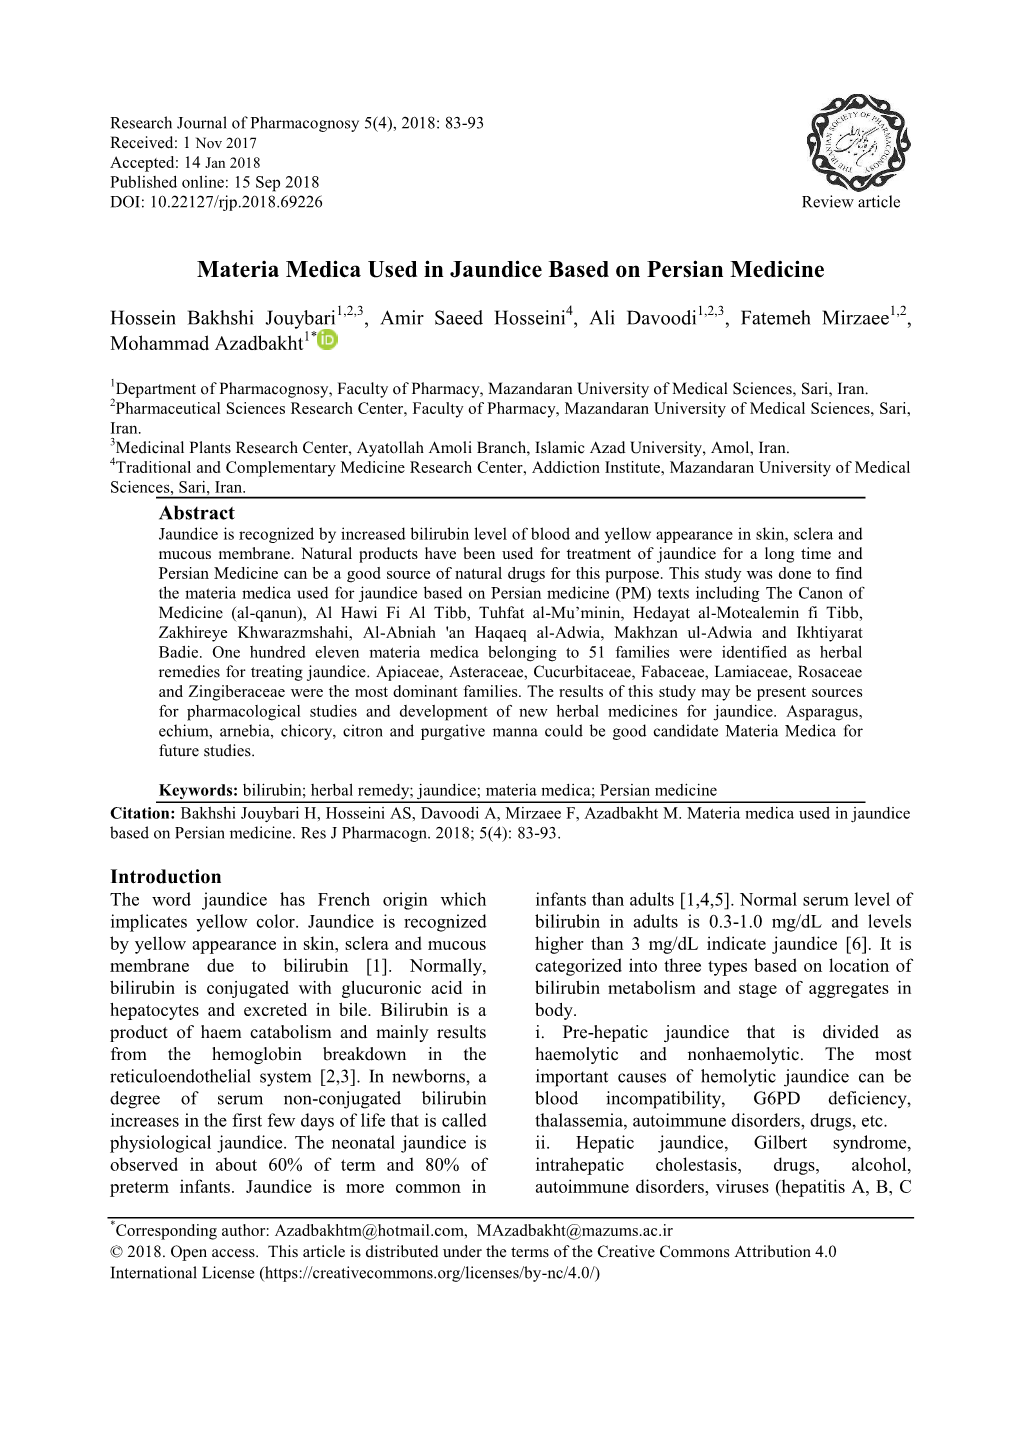 Materia Medica Used in Jaundice Based on Persian Medicine